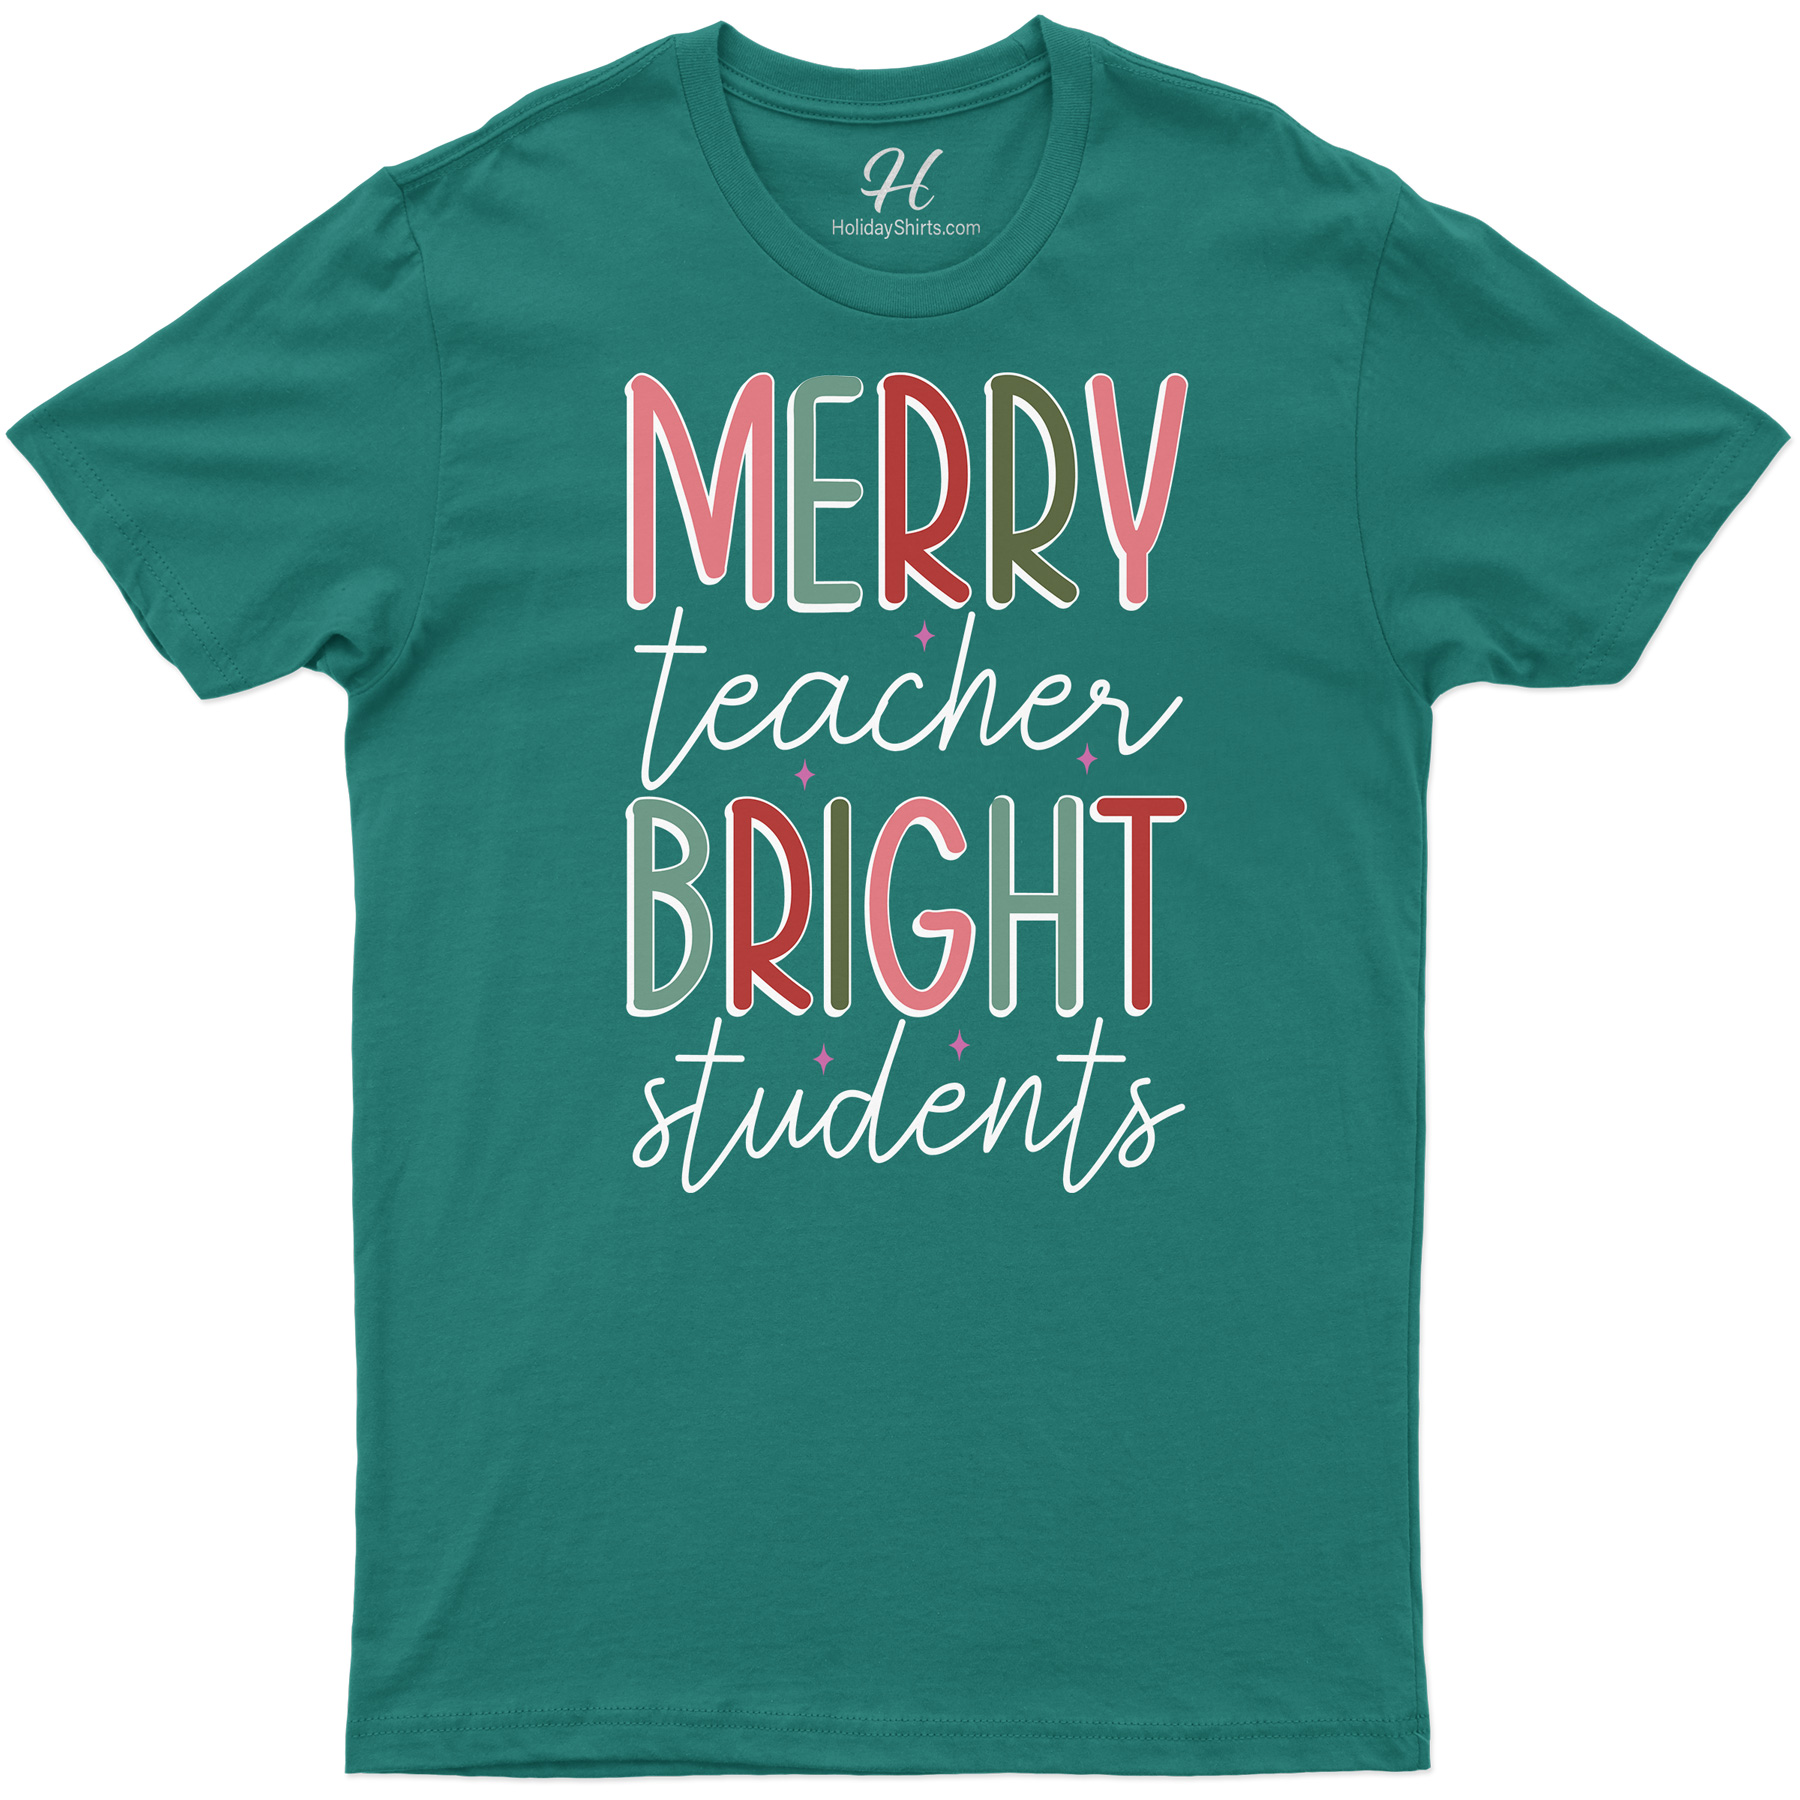 Bright Students' Festive Christmas Tee - Holidayshirts